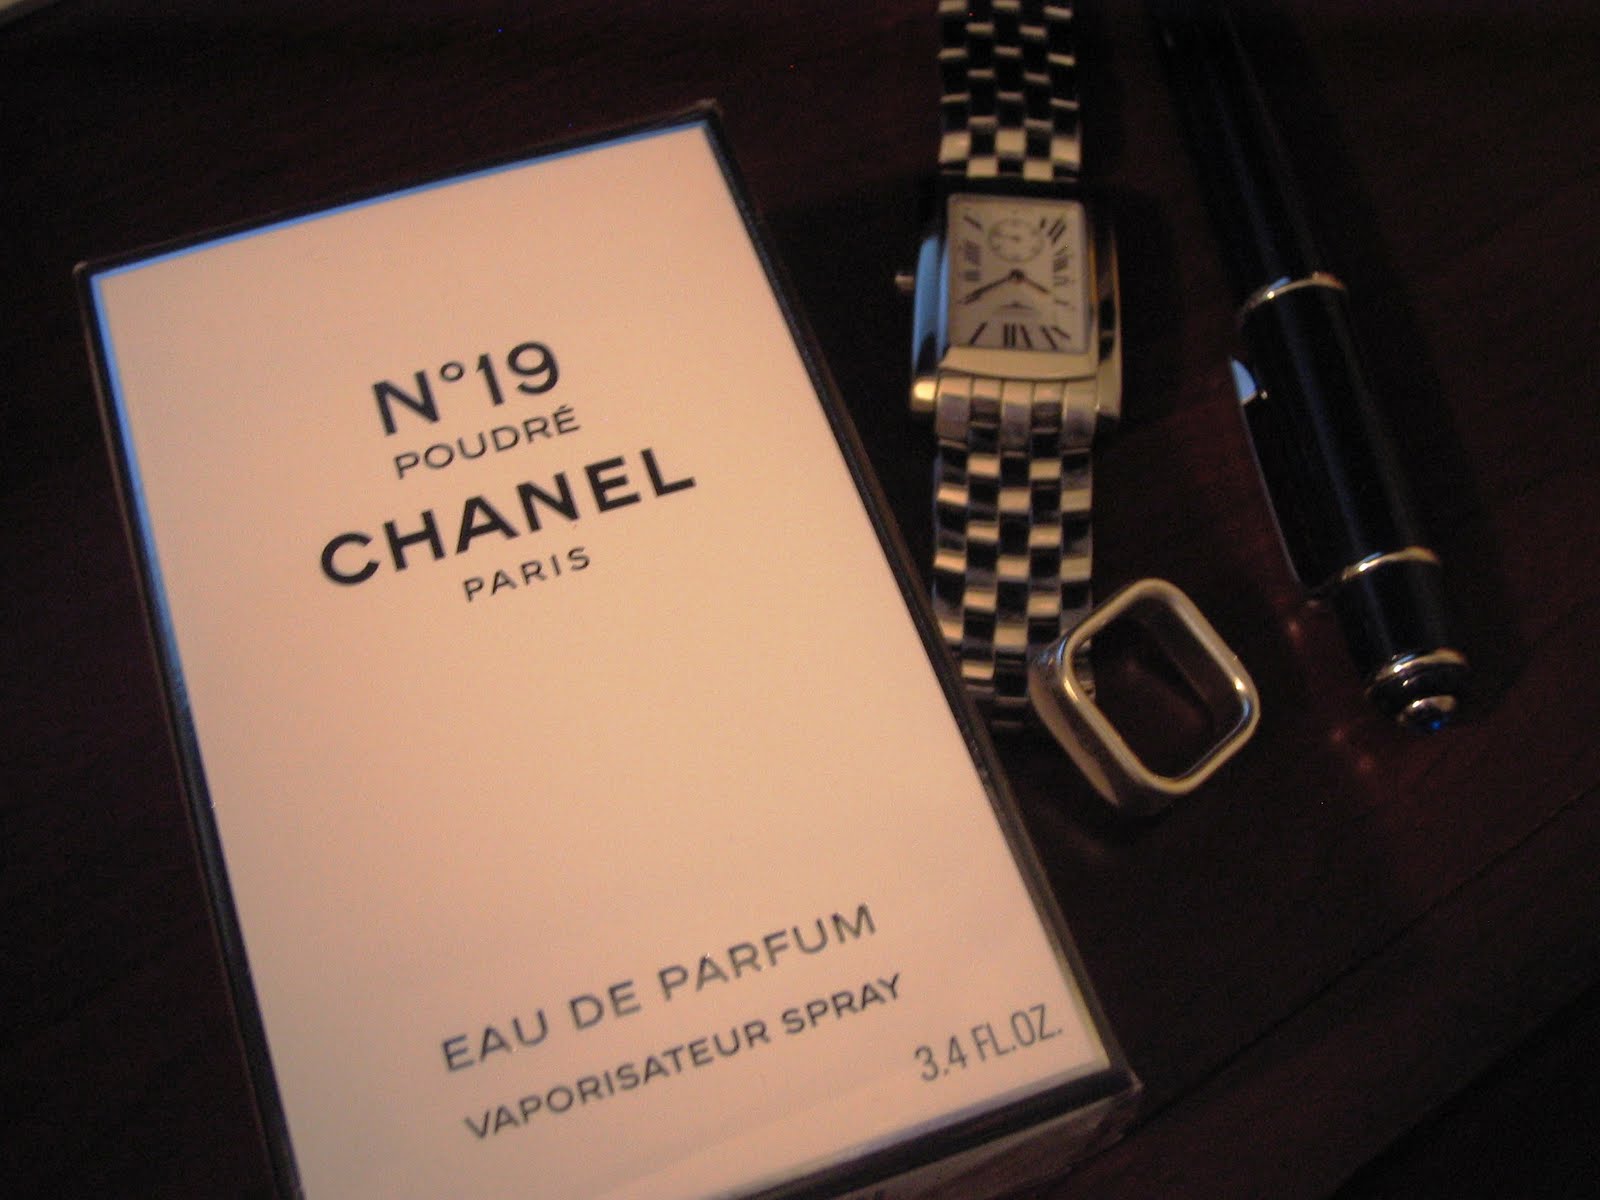  No. 19 by Chanel for Women, Eau De Parfum Spray, 3.4